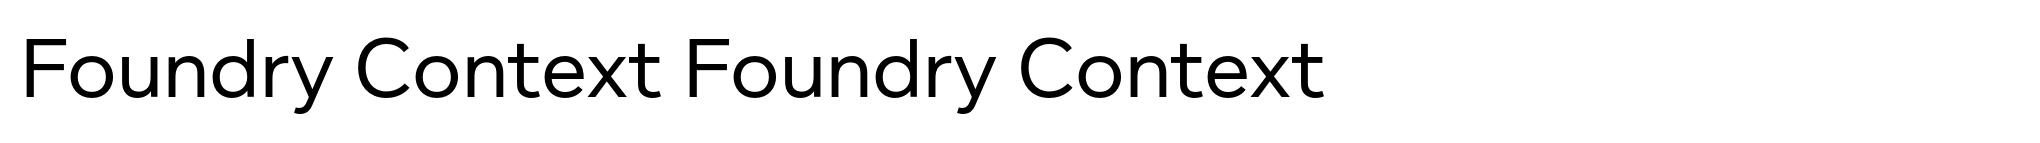 Foundry Context Foundry Context image